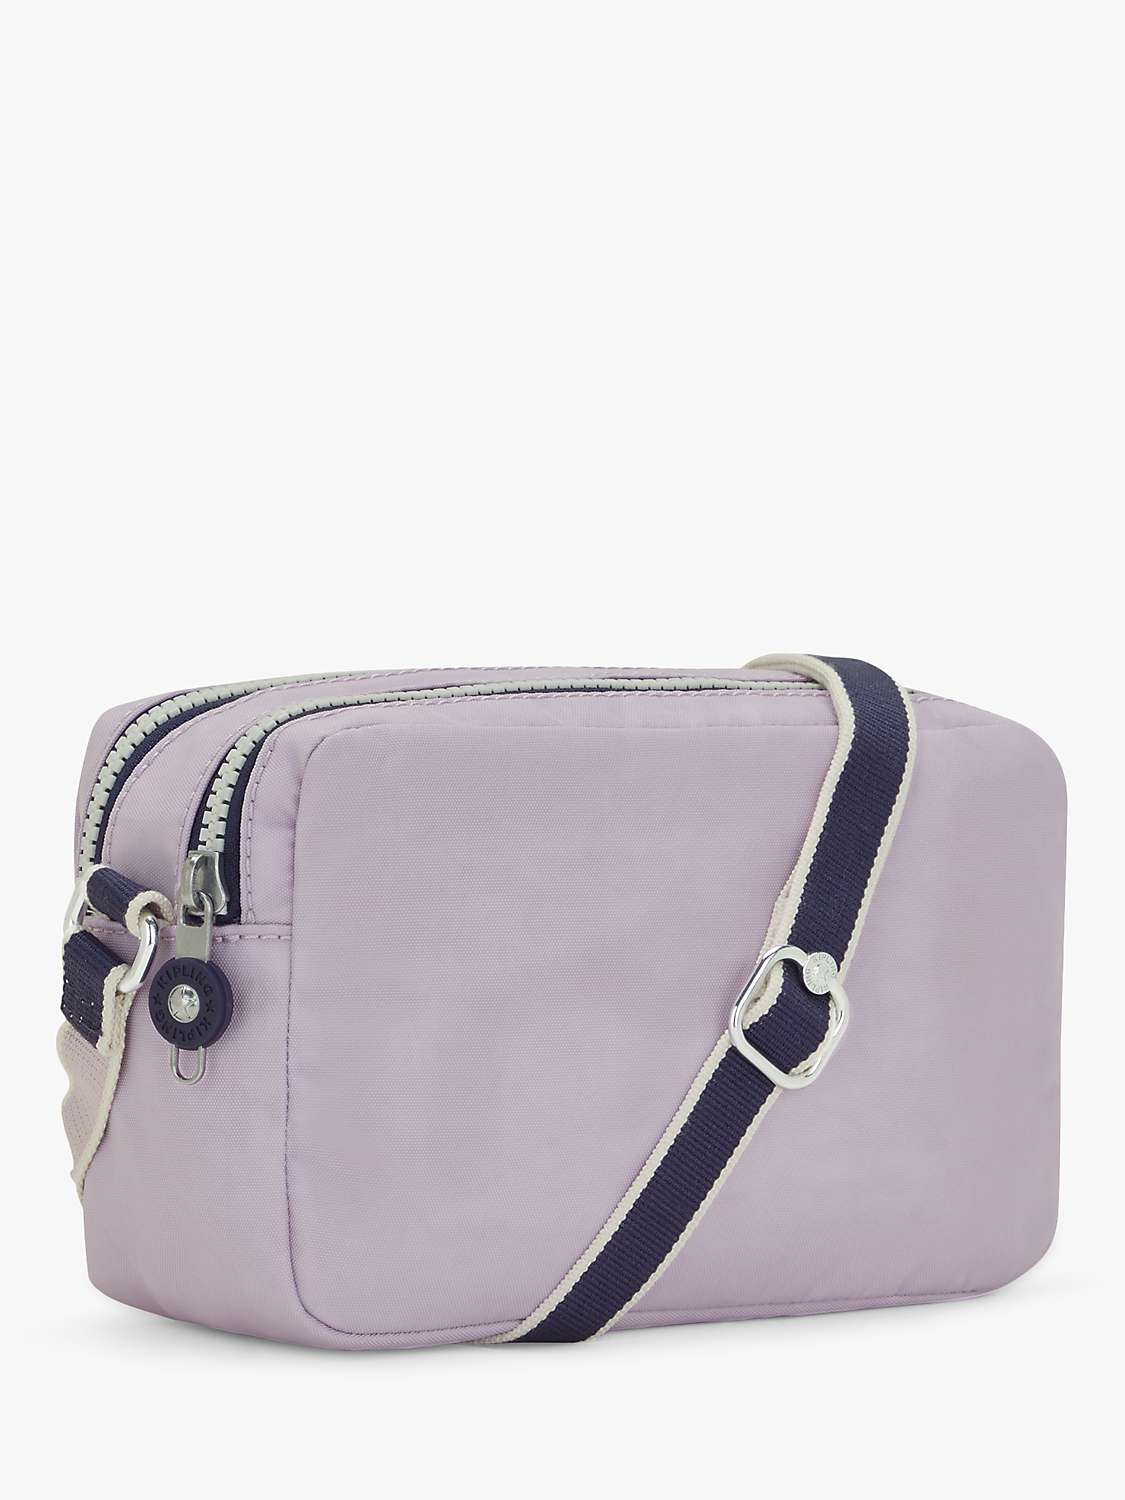 Buy Kipling Milda Small Camera Style Crossbody Bag Online at johnlewis.com